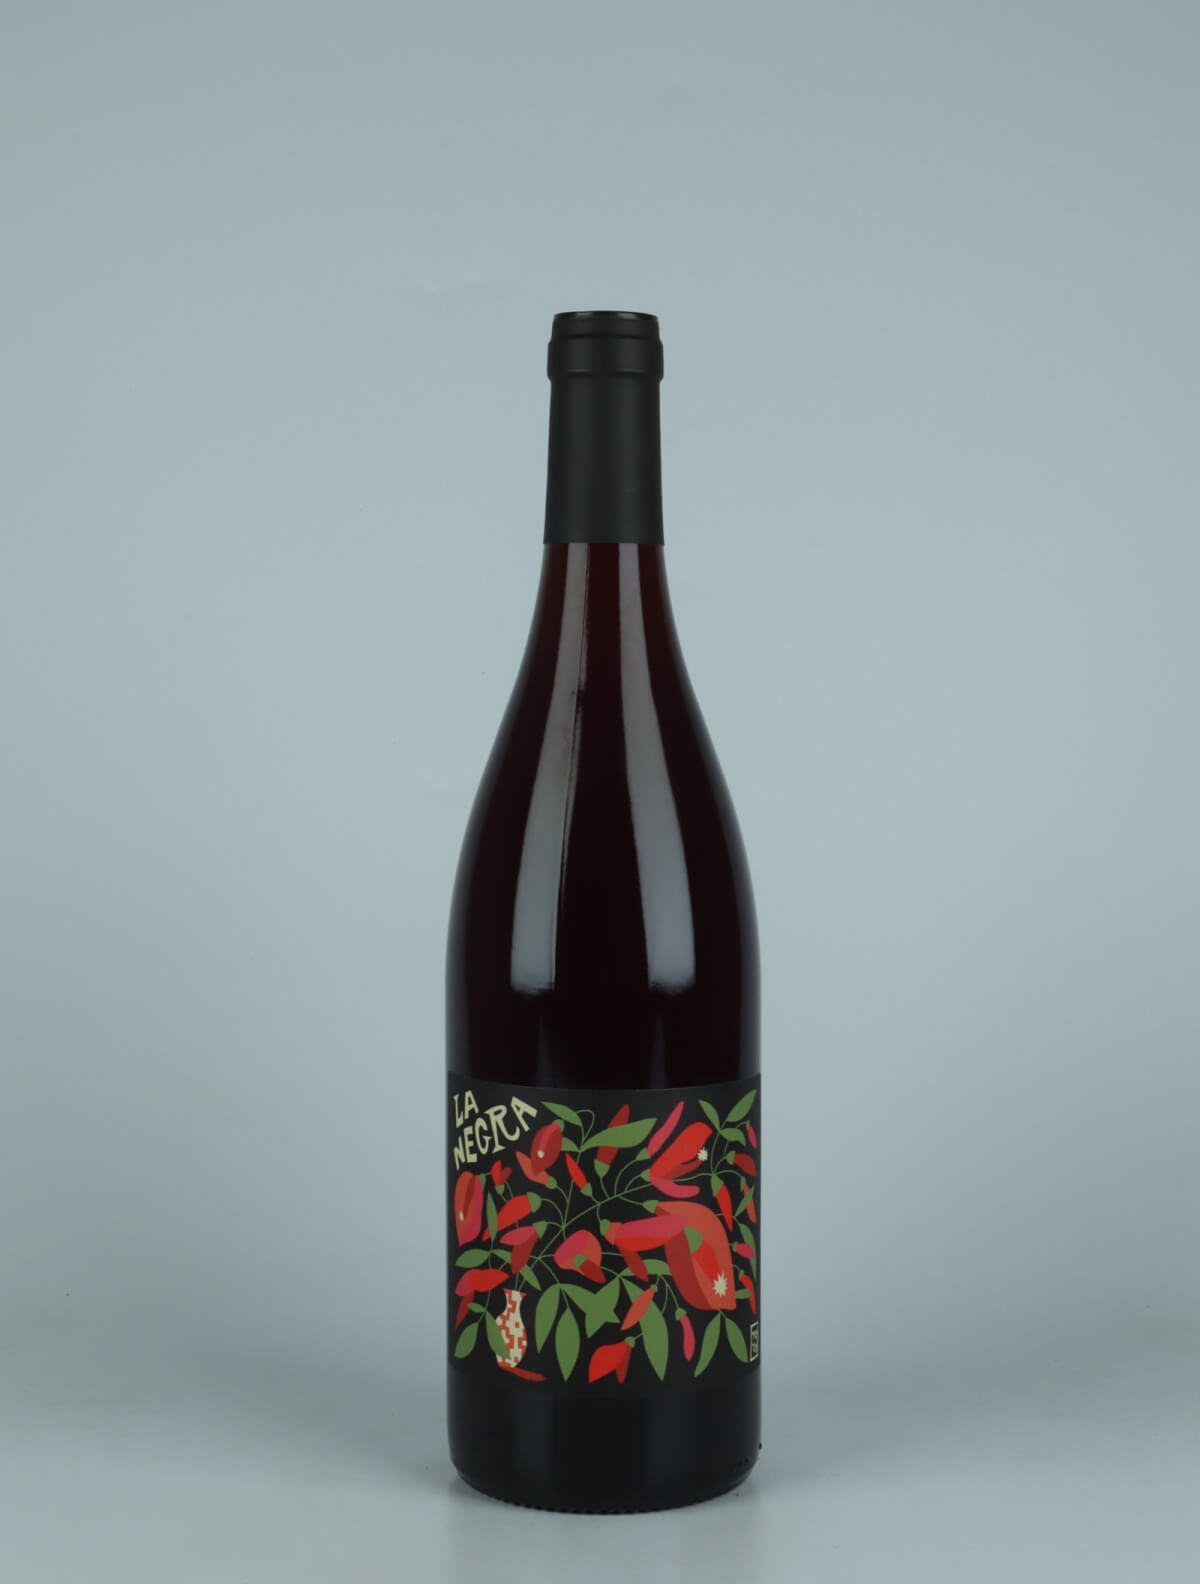 En flaske 2023 La Negra Rødvin fra Domaine Yoyo, Rousillon i Frankrig